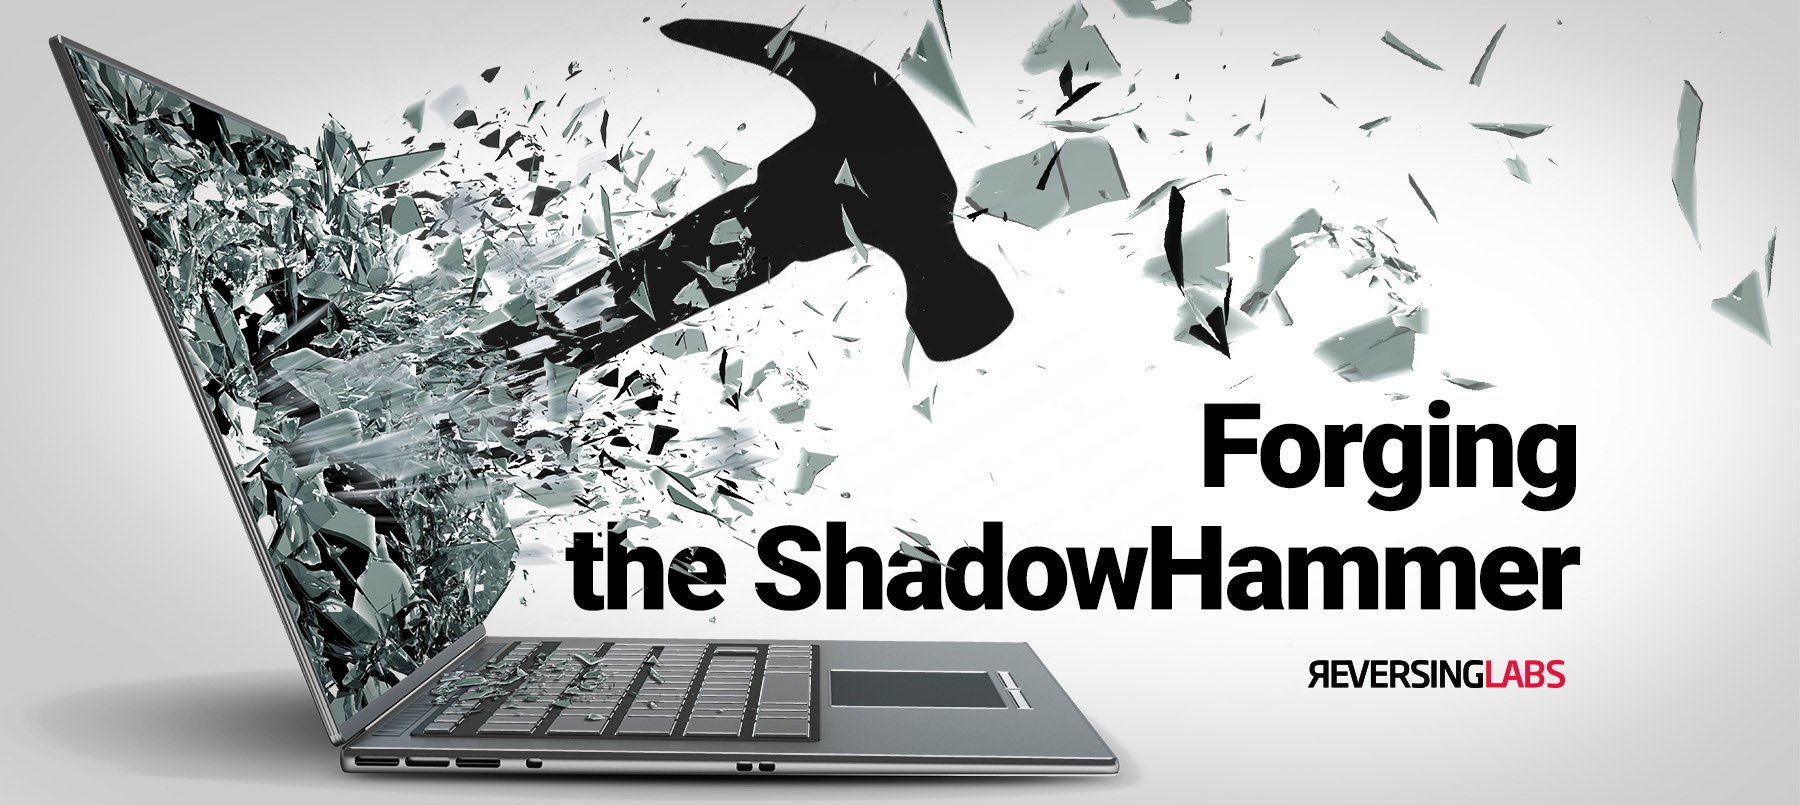 Forging the ShadowHammer